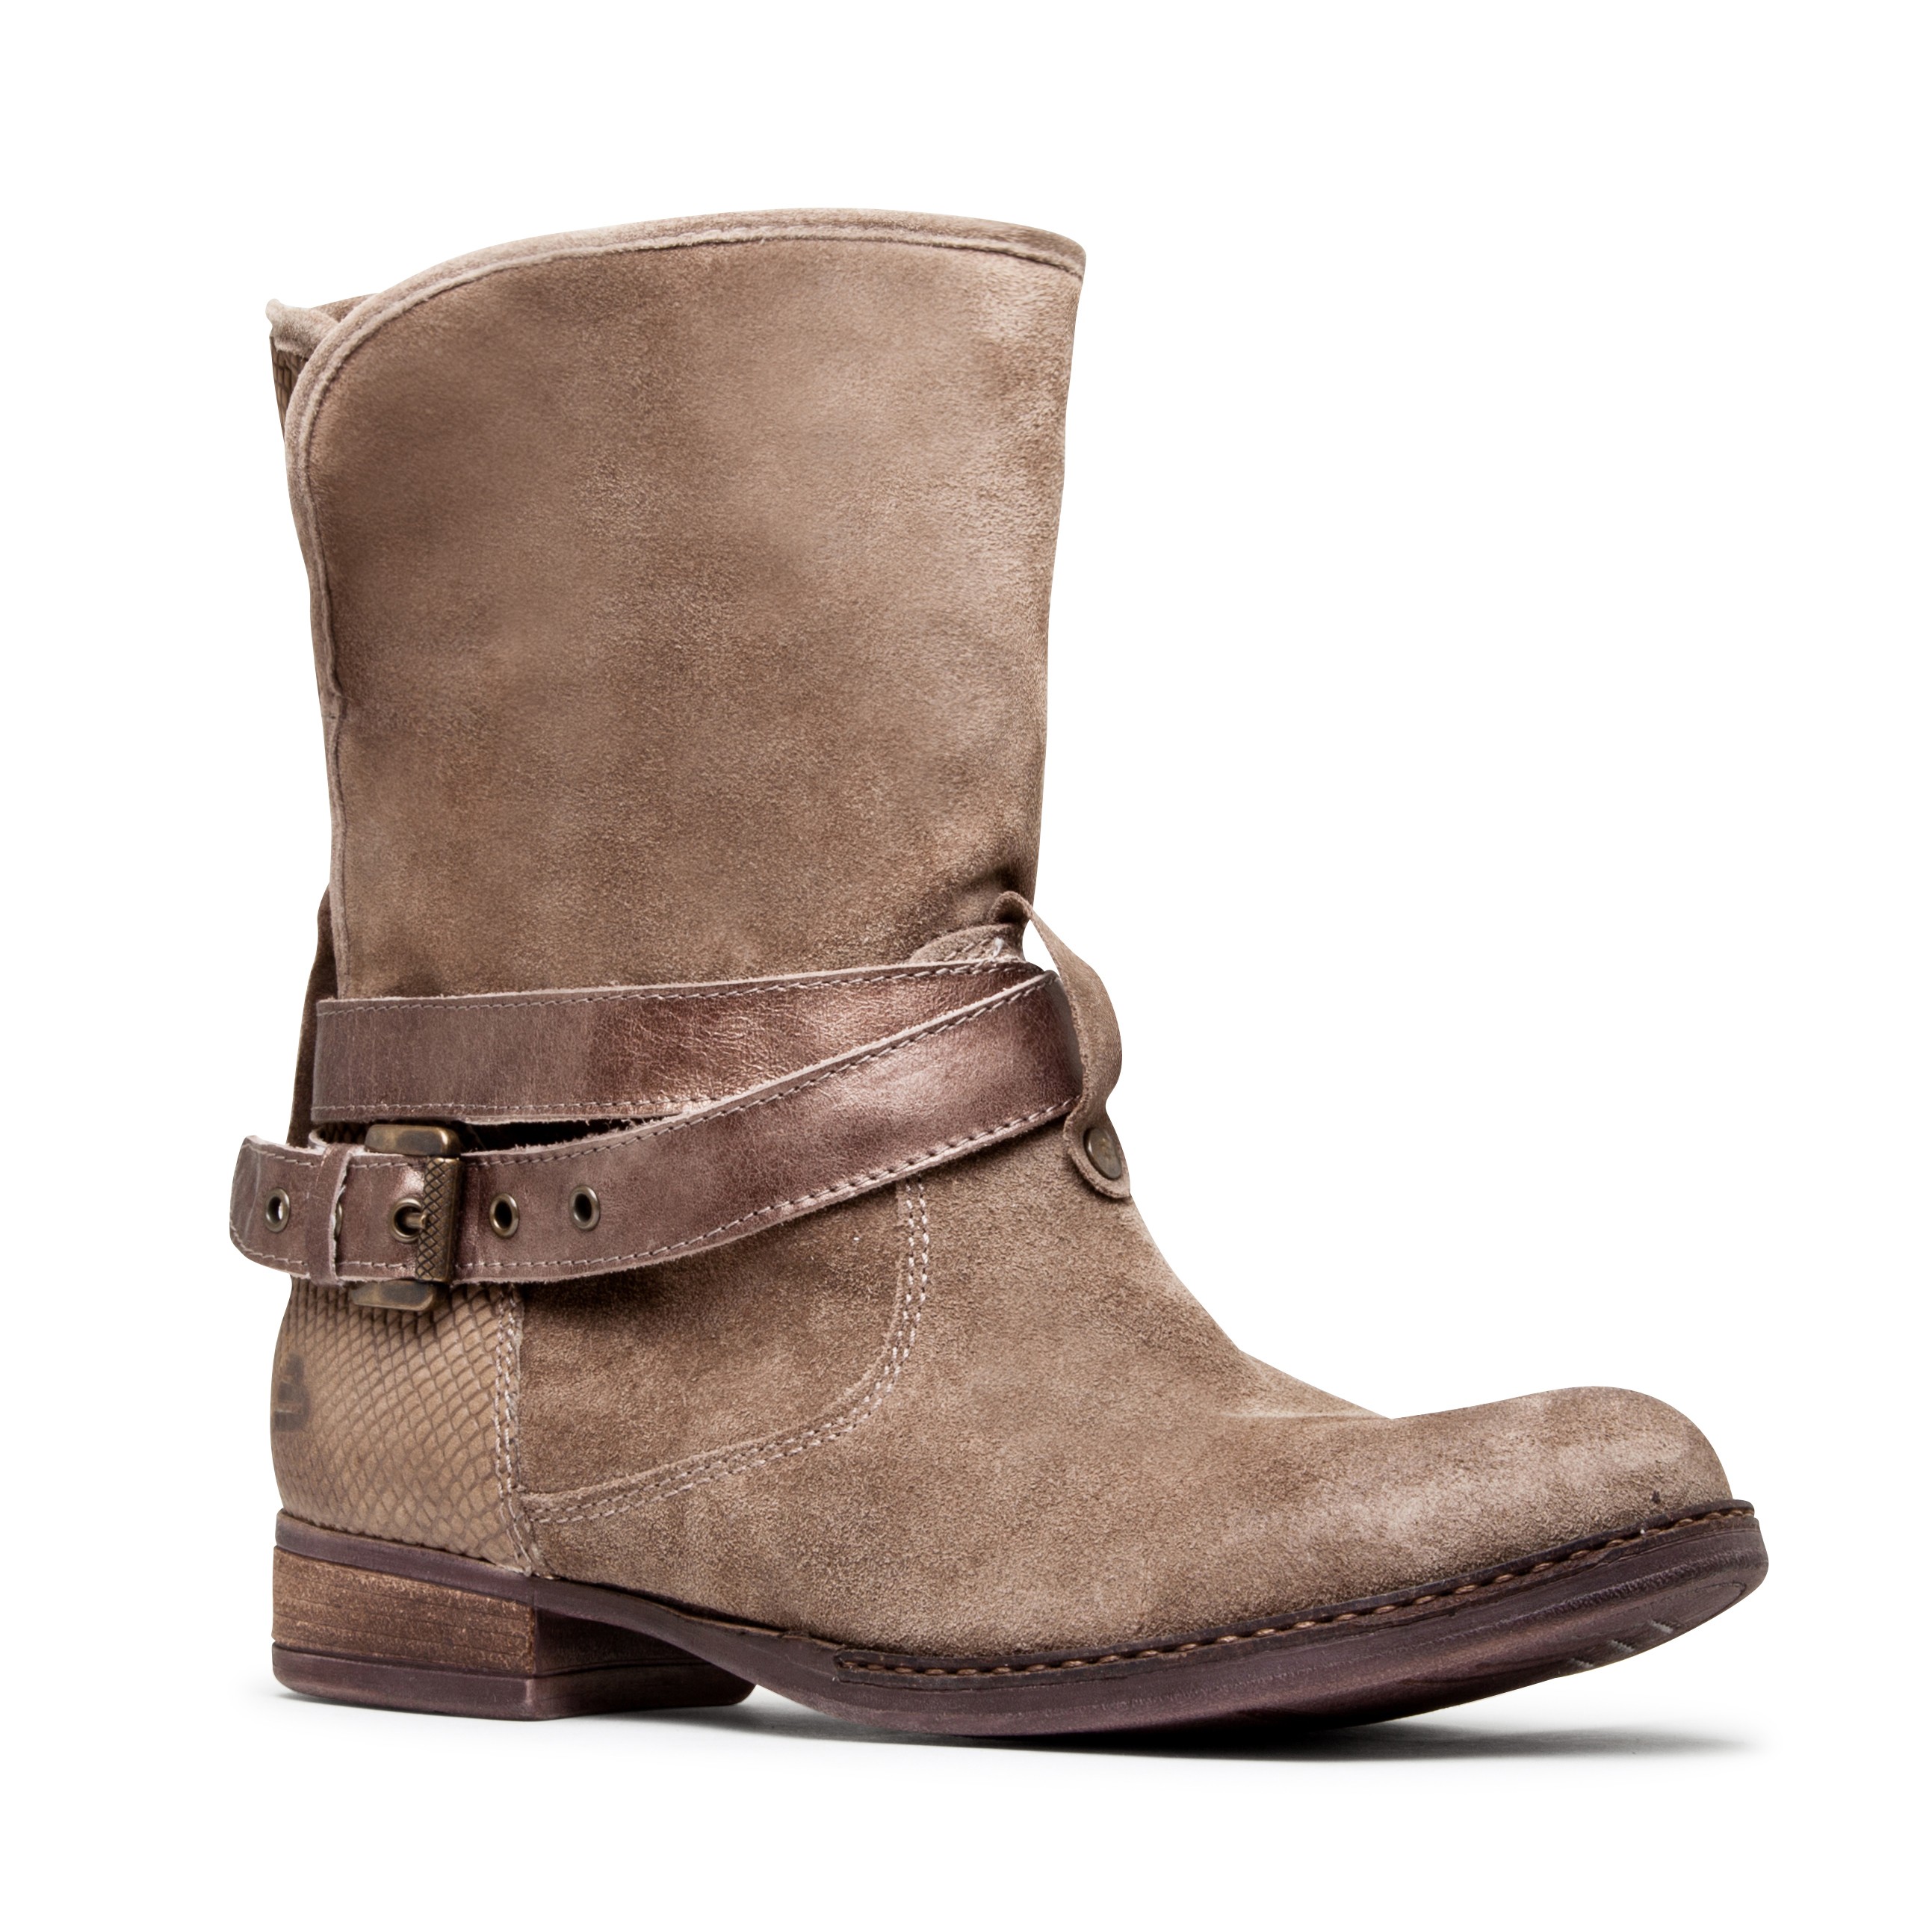 The Shoe Edition: Mi Piaci & Overland Present Autumn/Winter 2015 